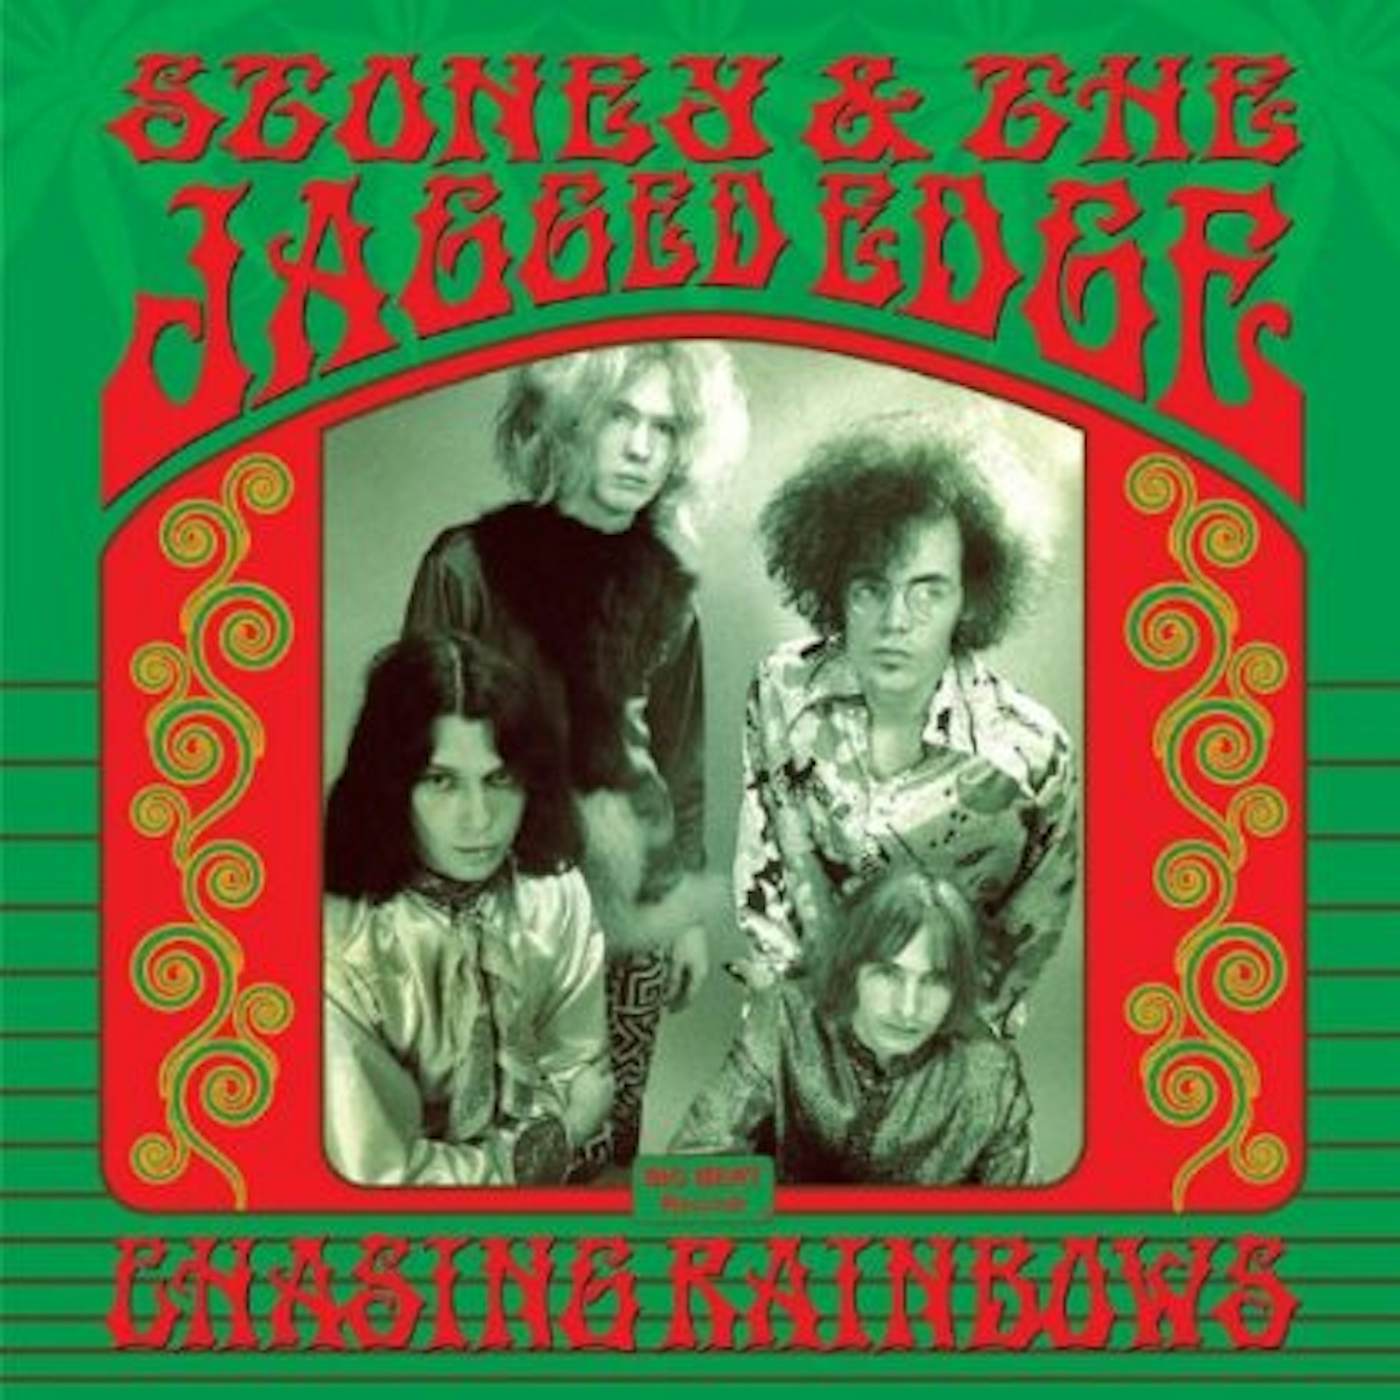 Stoney & The Jagged Edge Chasing Rainbows Vinyl Record